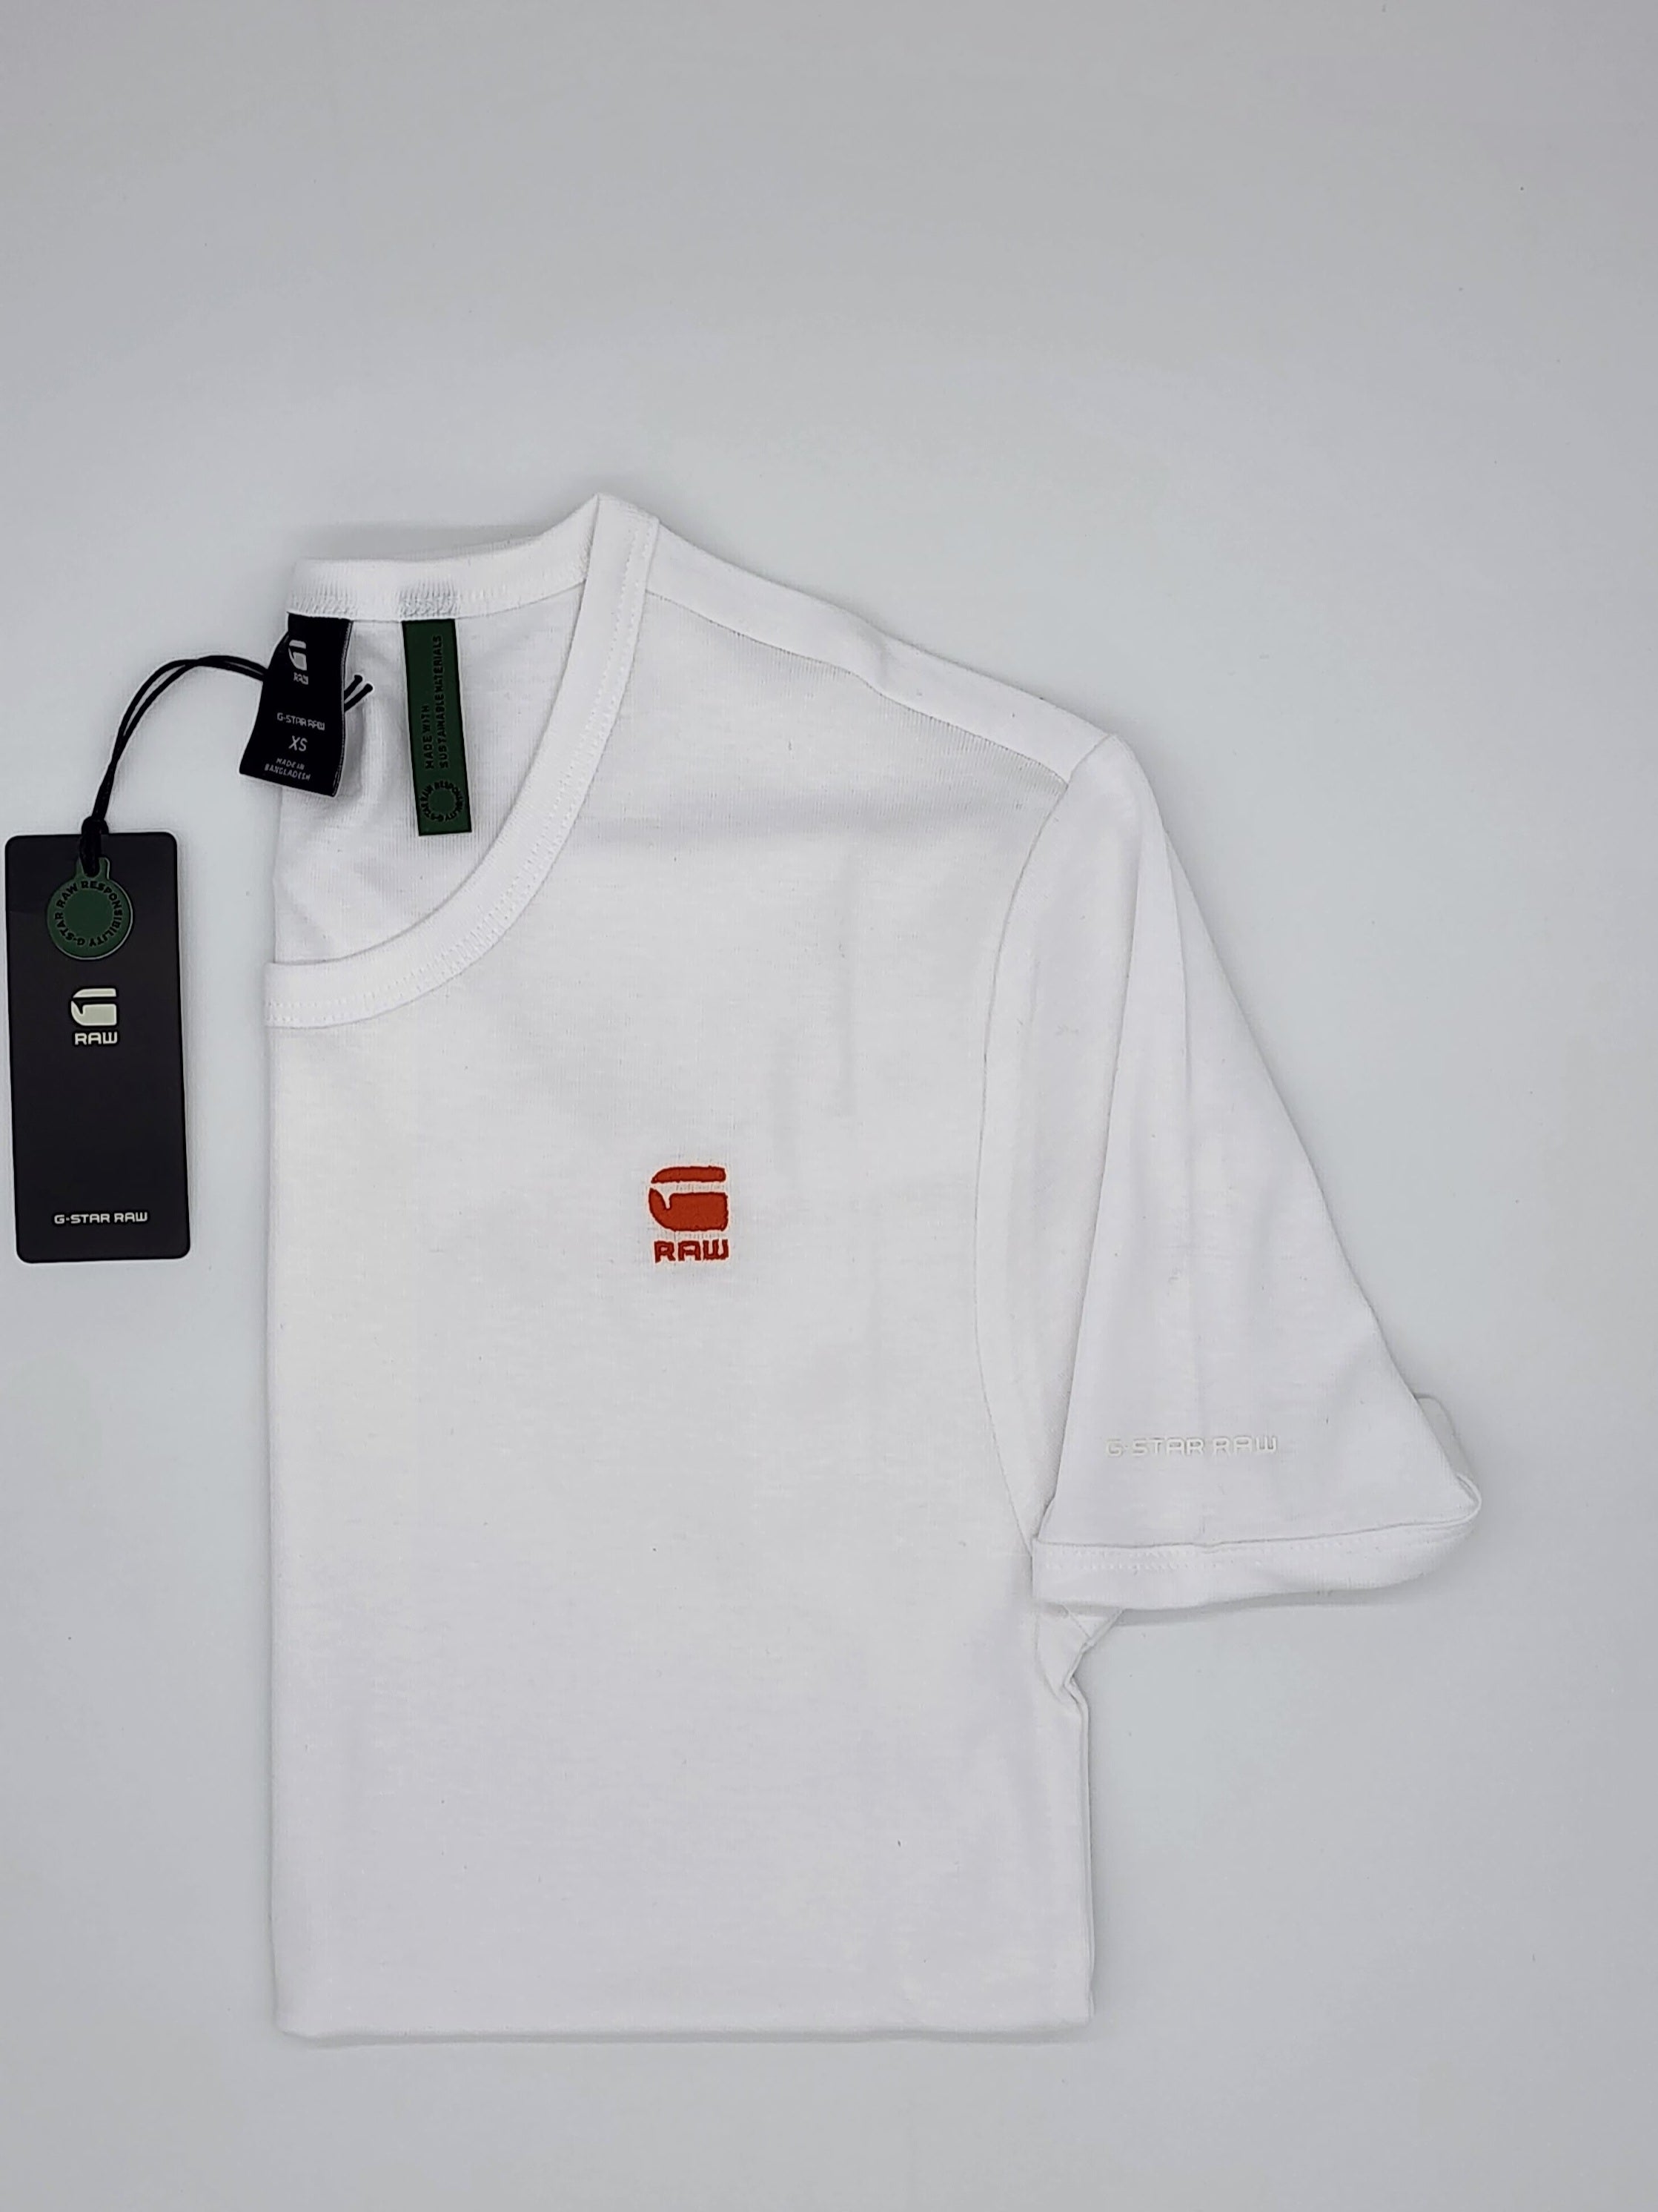 Tektonisch Missionaris Faculteit G-Star Basic T-Shirt (White with Acid Orange Logo) – Dazzleonline